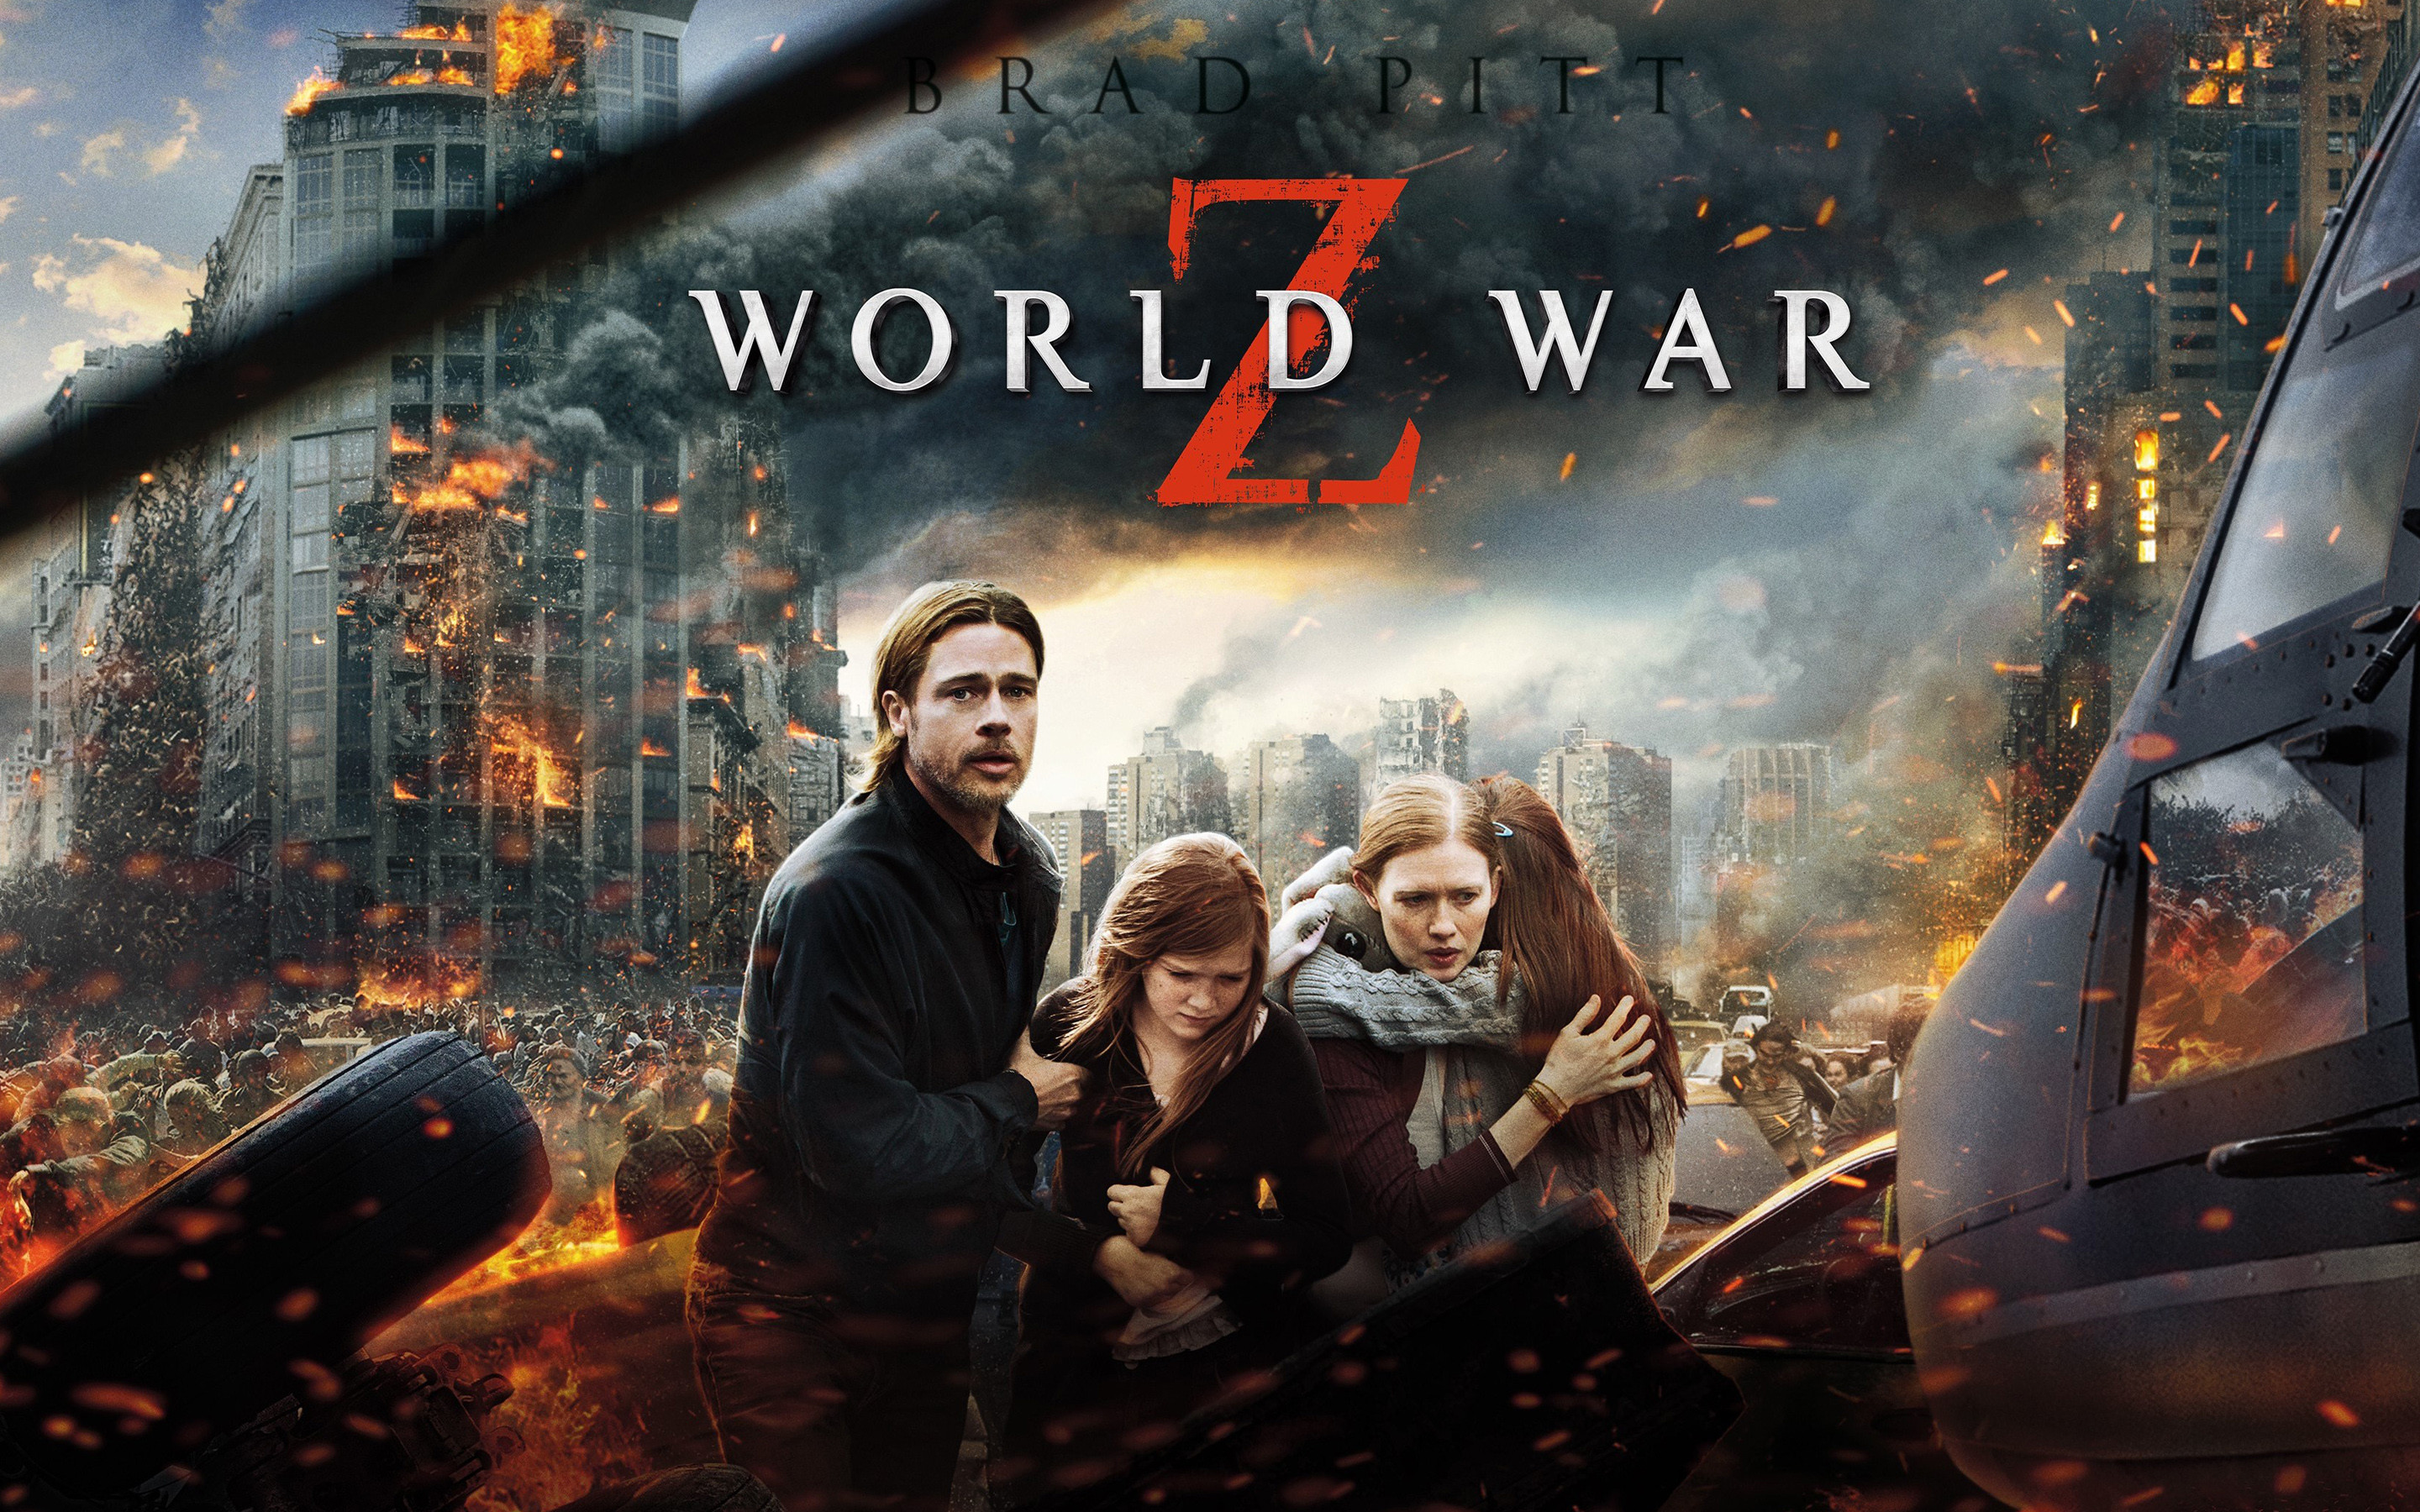 World War Z Htc One Wallpaper War Z 2013 Unrated Cut